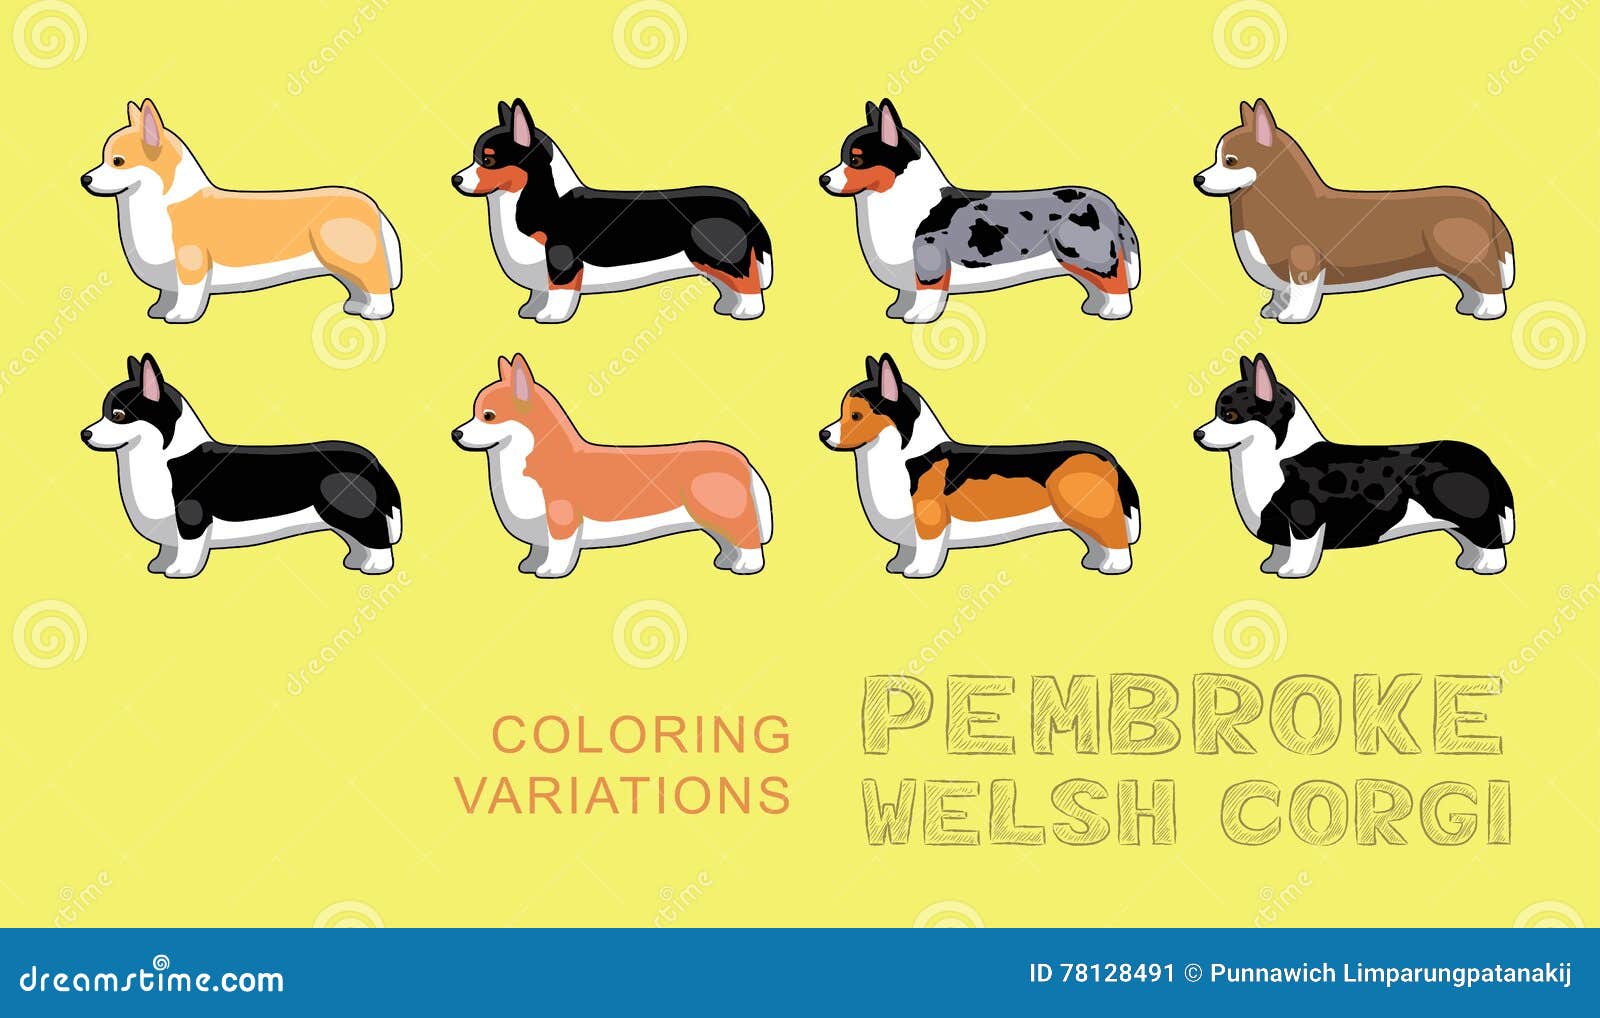 Dog Pembroke Welsh Corgi Coloring Variations Vector Illustration Stock Vector Illustration Of Stand Puppy 78128491